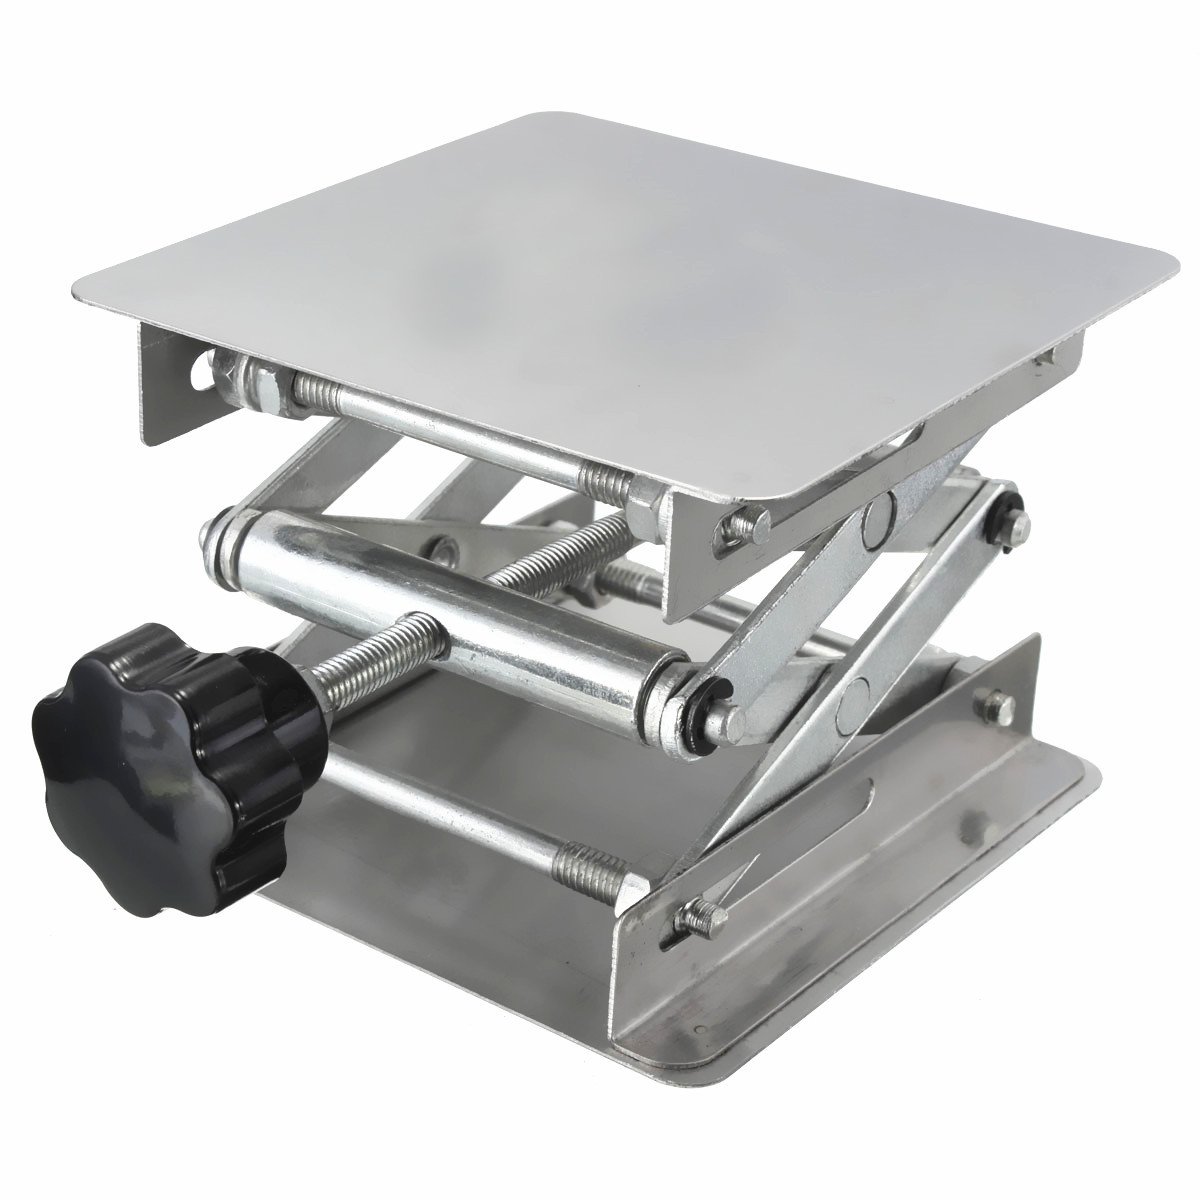 4 x 4" Stainless Steel Lifting Platform Lab Stand Laboratory Manual Lift Riser Lifter 100x100x150mm 2